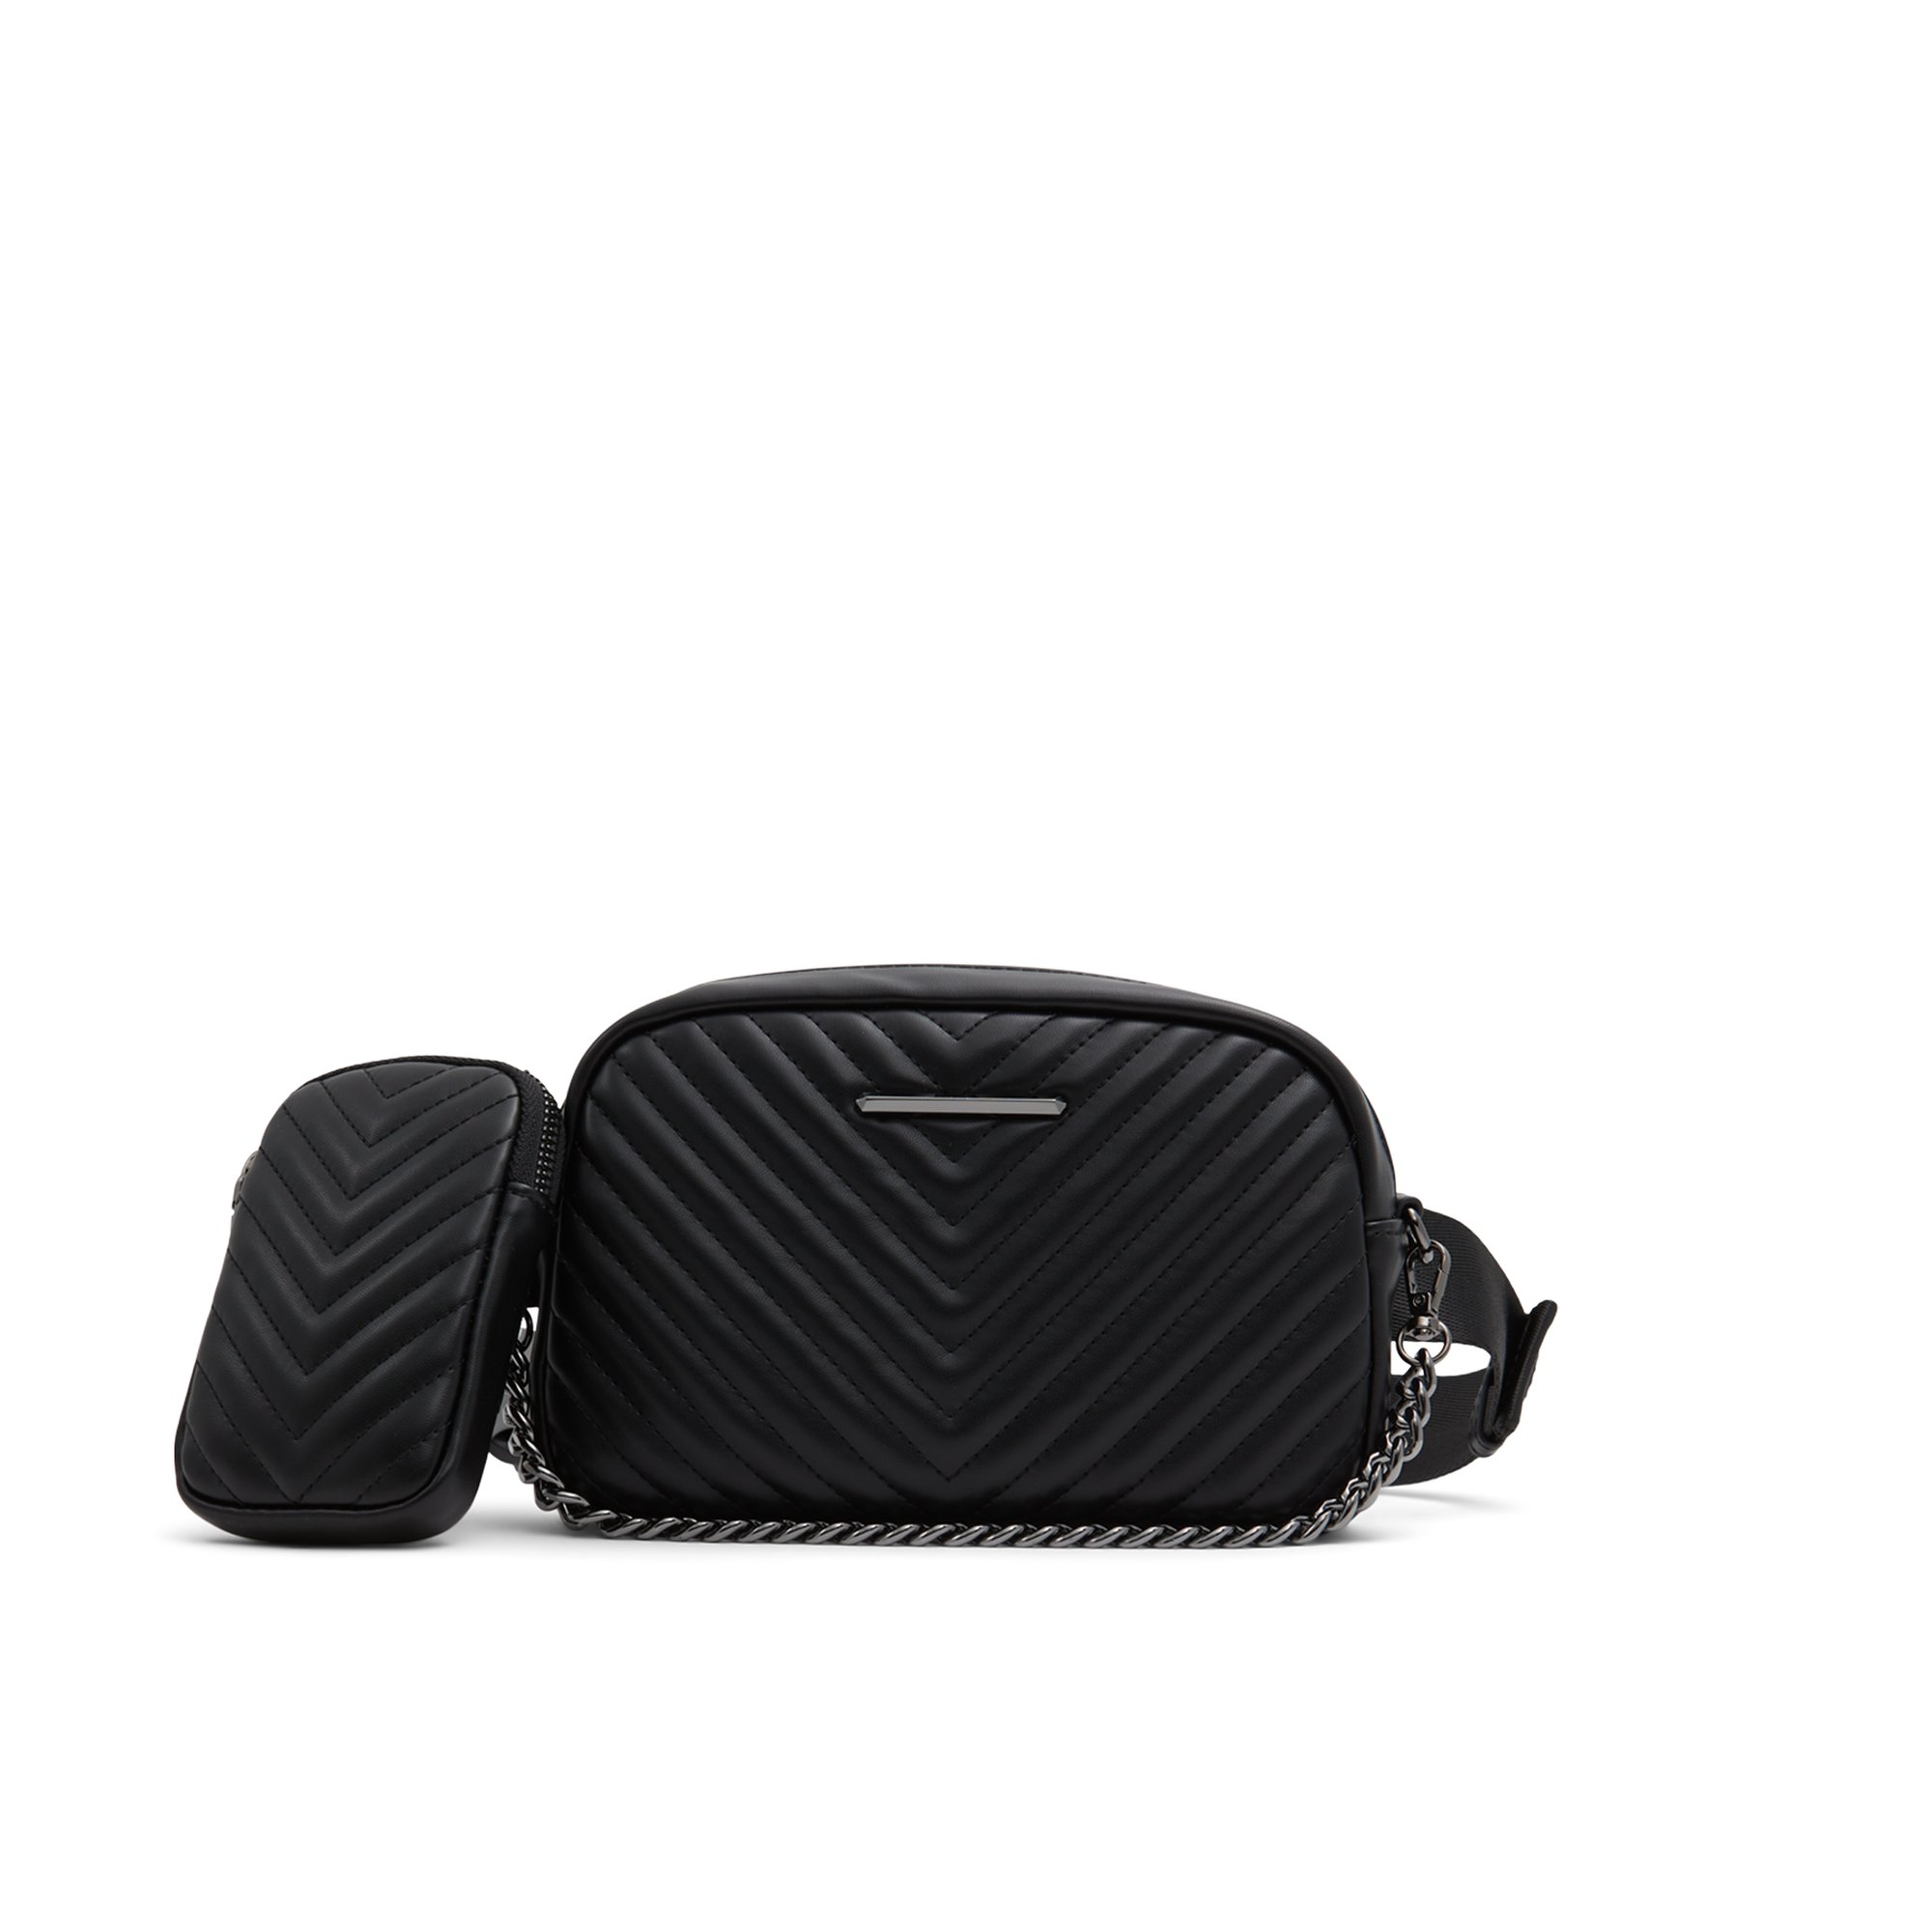 ALDO Zinkax - Women's Backpack Handbag - Black